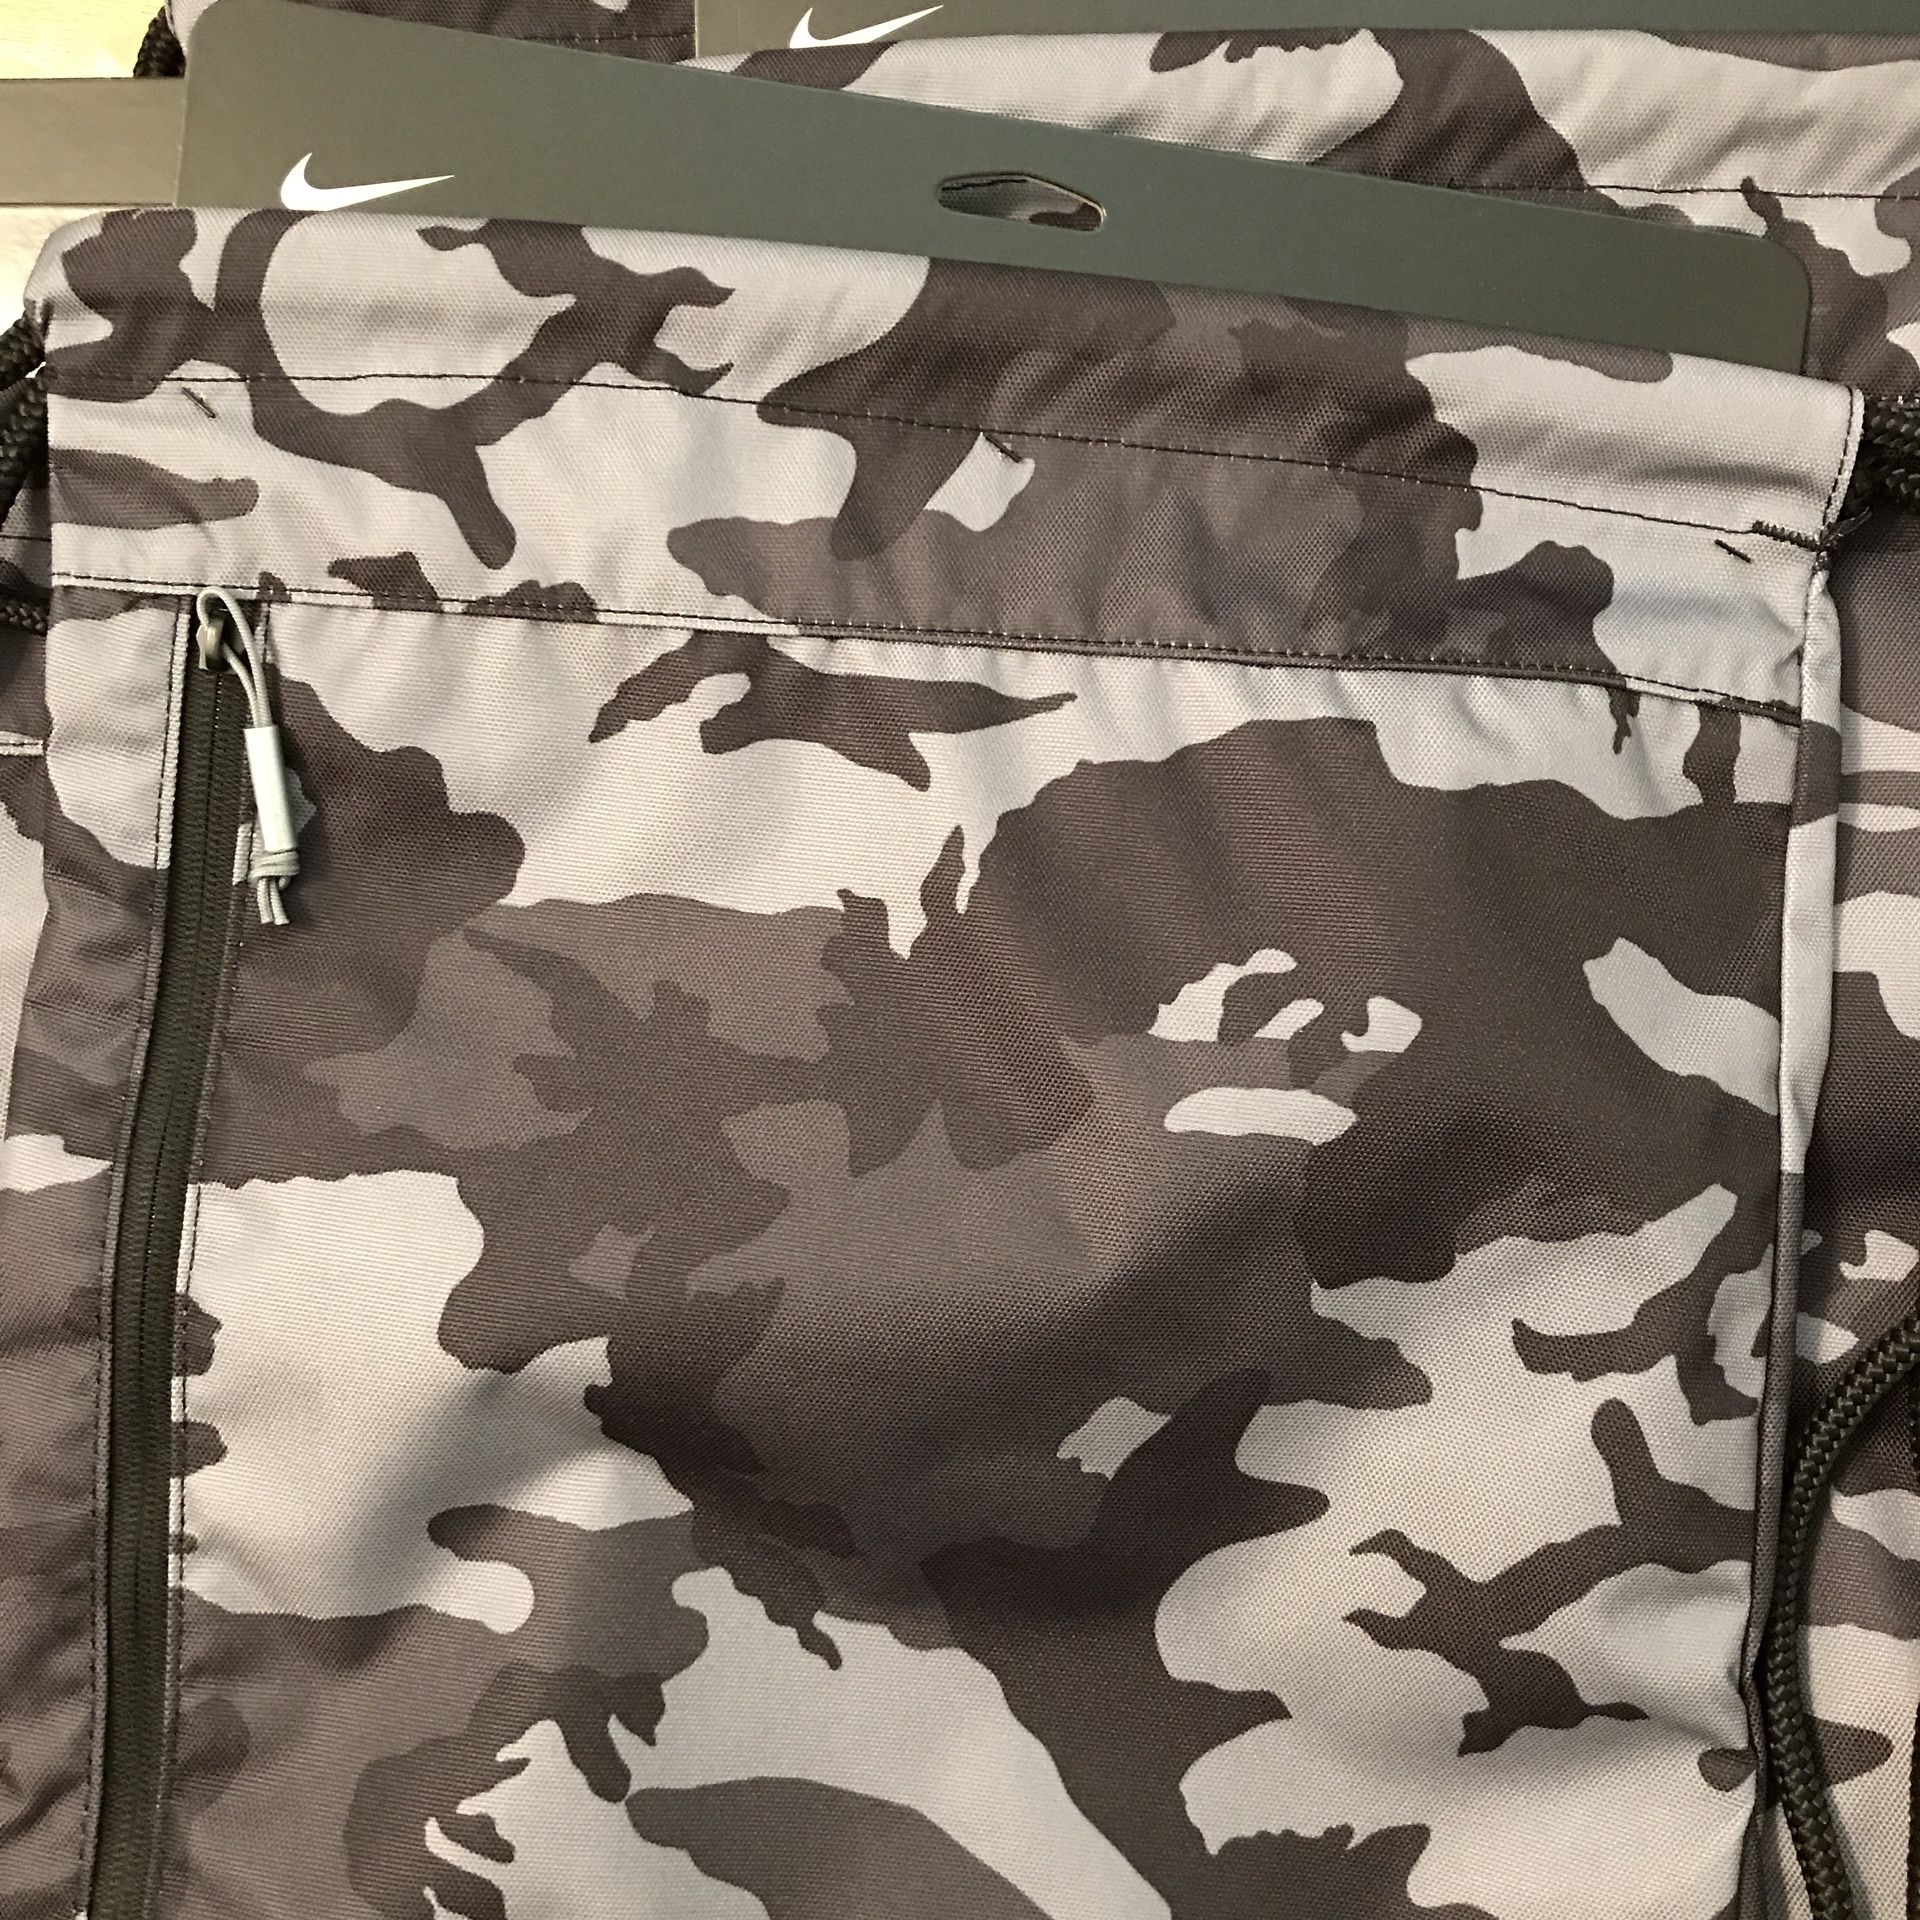 NIKE Drawstring Backpacks (32 All New)